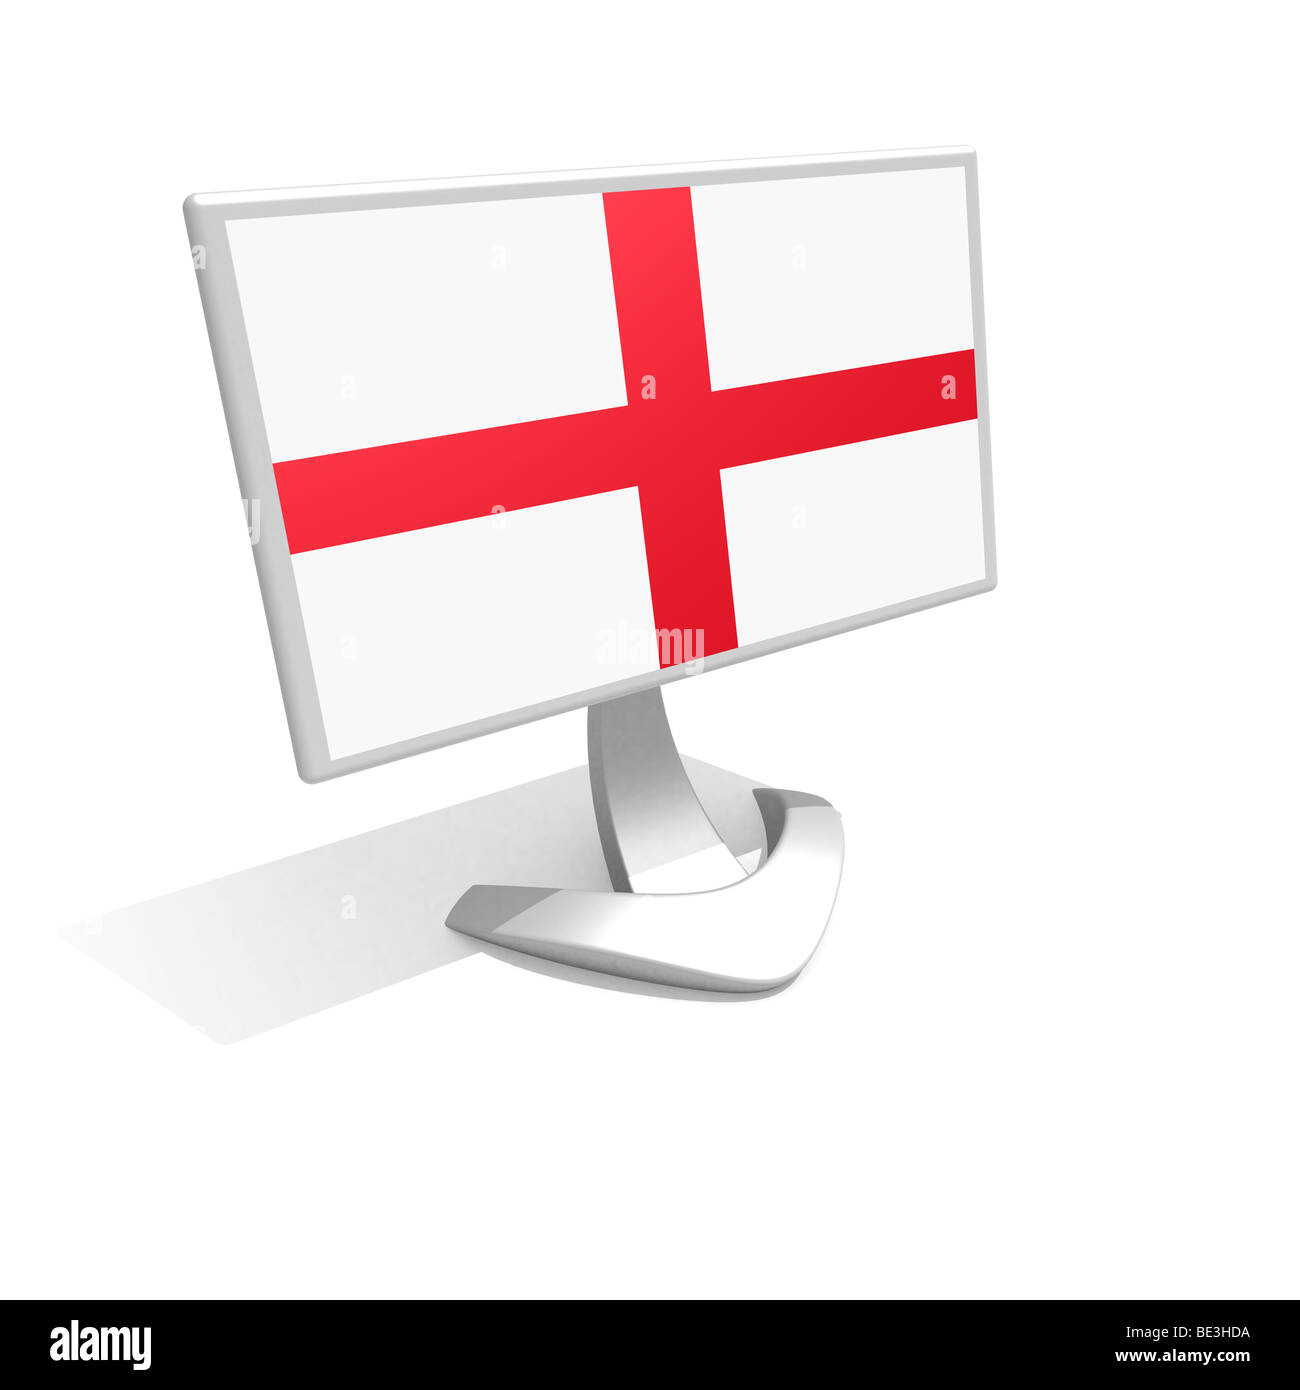 England flag Stock Photo